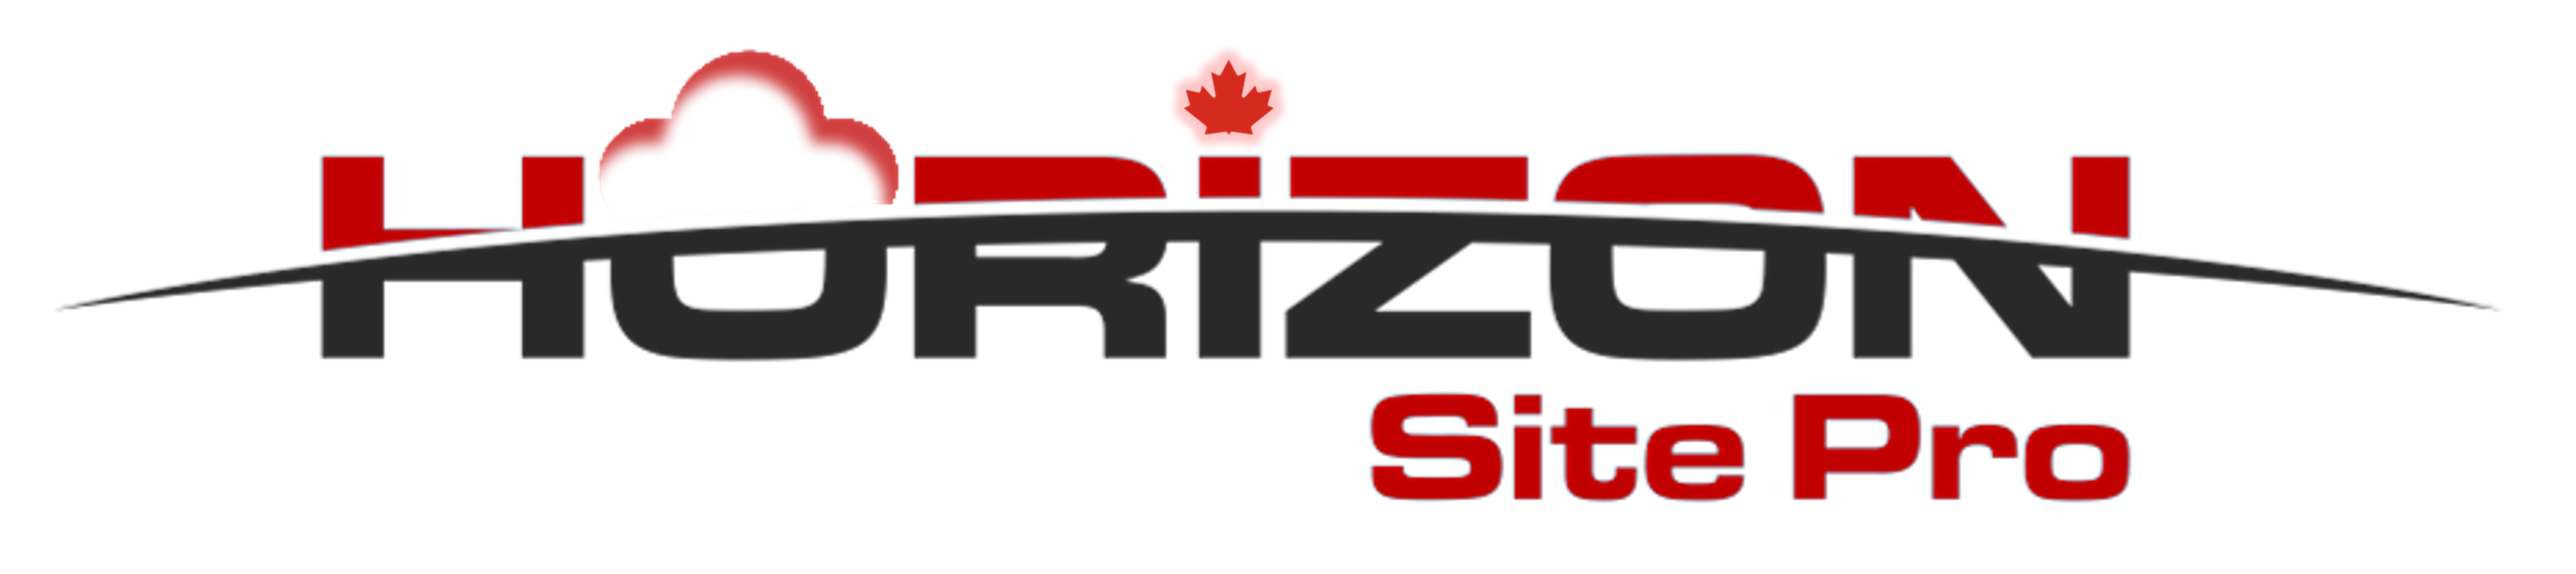 Horizon Site Pro - Best PM Software